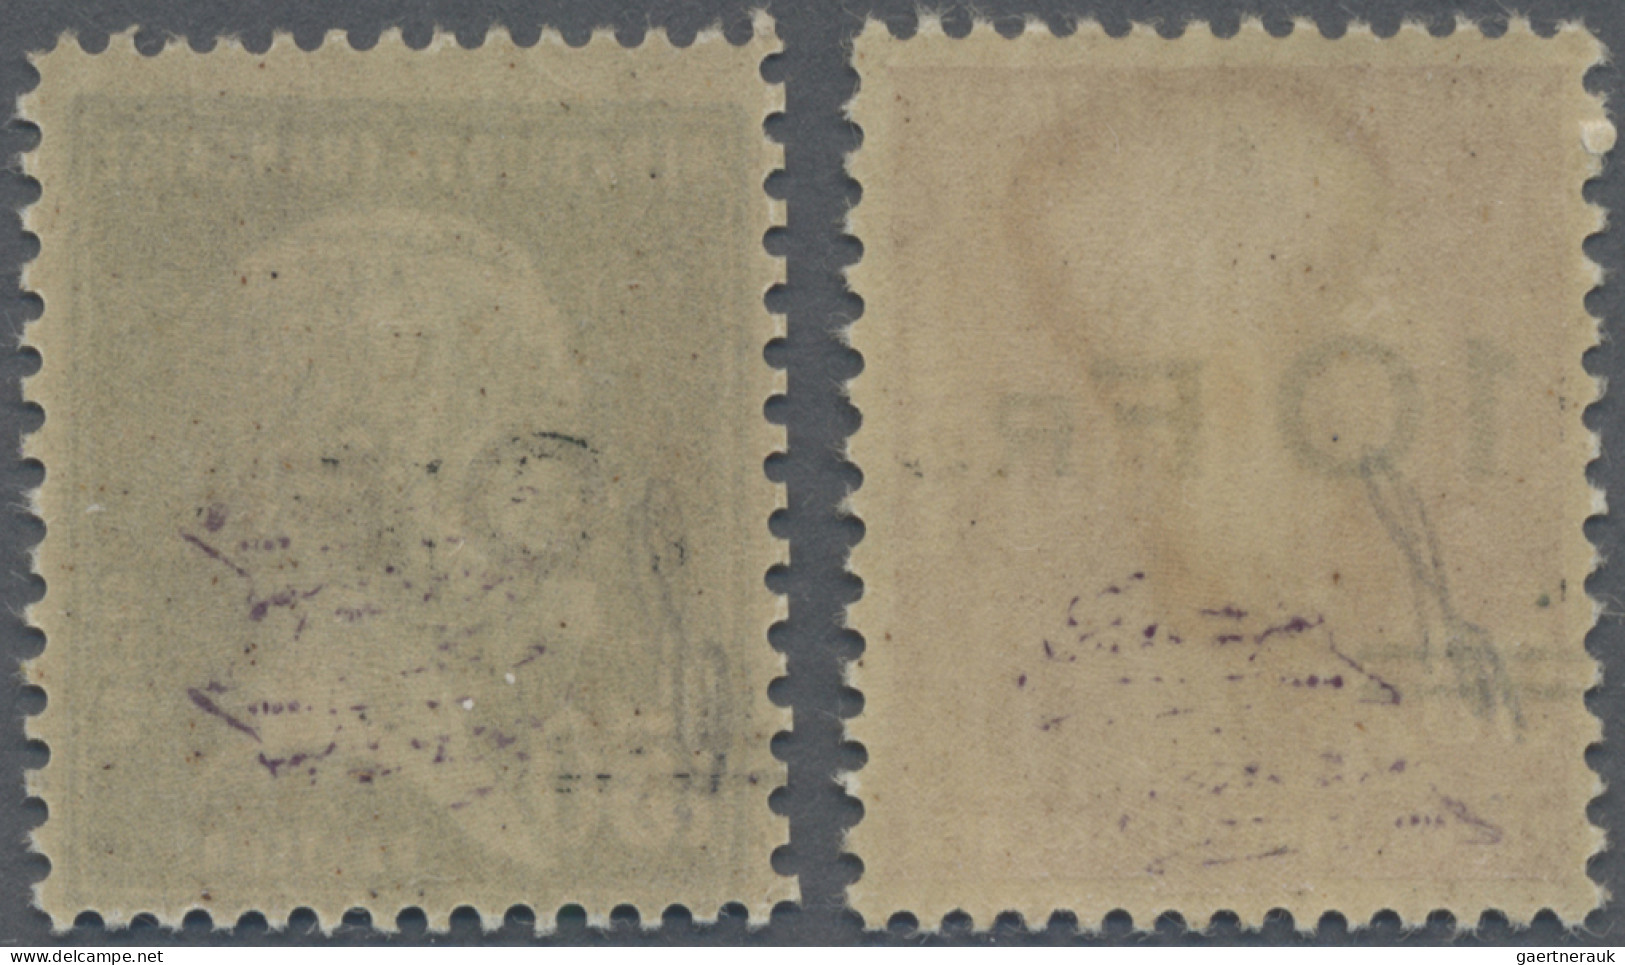 France: 1928, Airmail "Ile De France" 10fr. On 90c. Lilac-rose And 10fr. On 1.50 - Ongebruikt